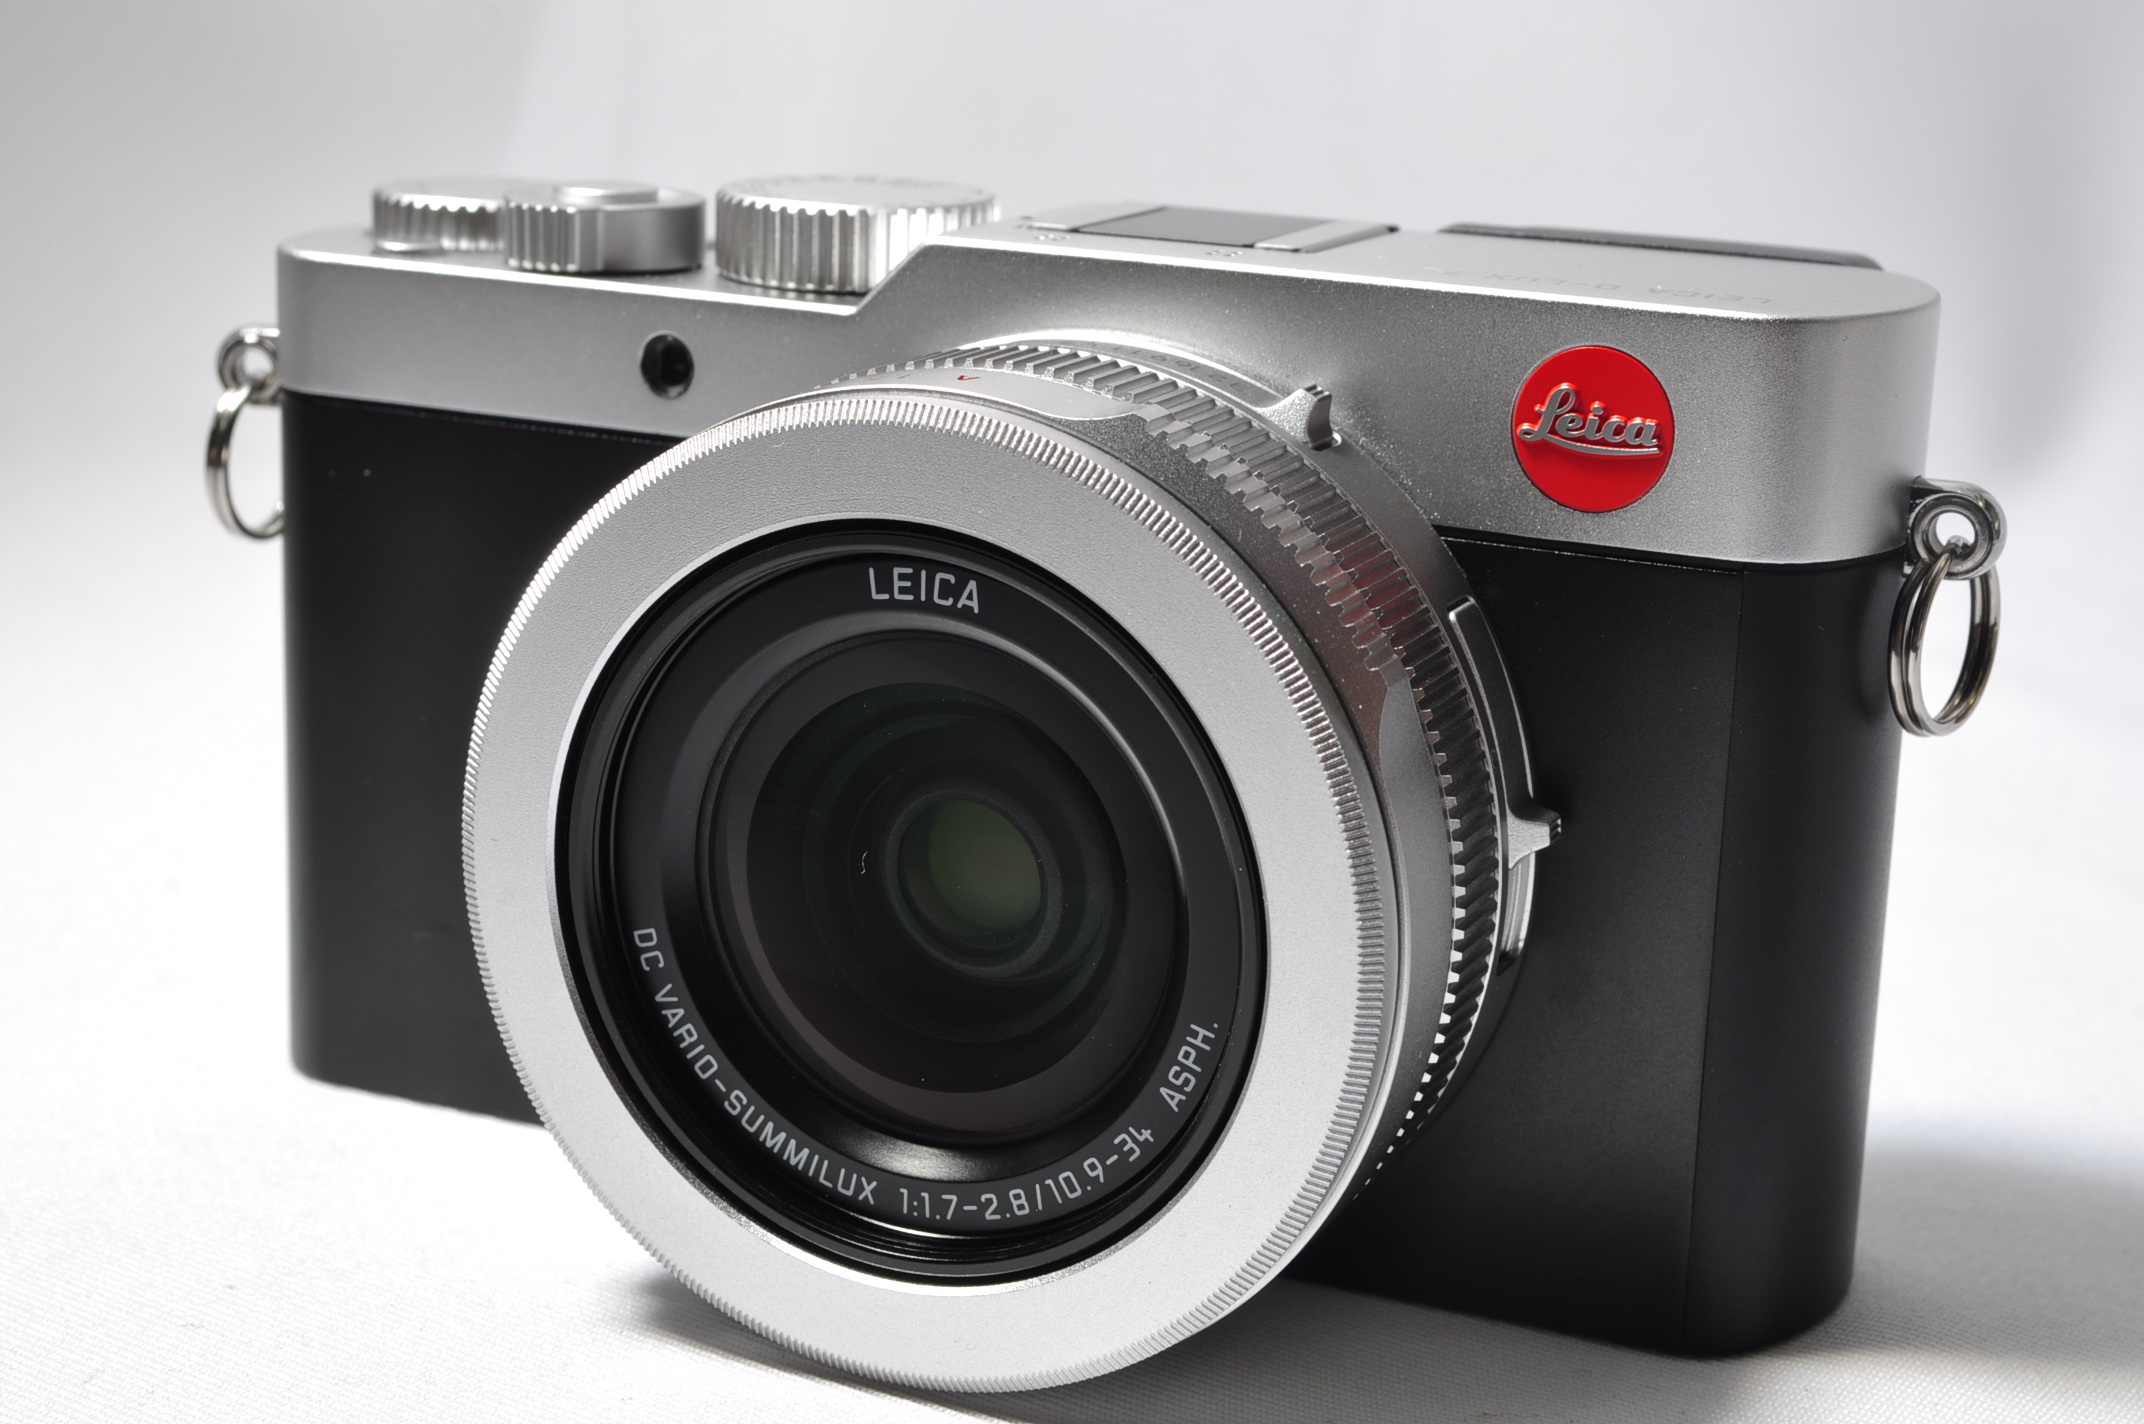  Leica ライカ D-LUX7 大型センサー搭載デジタルカメラ SDカード付き １ヶ月保証